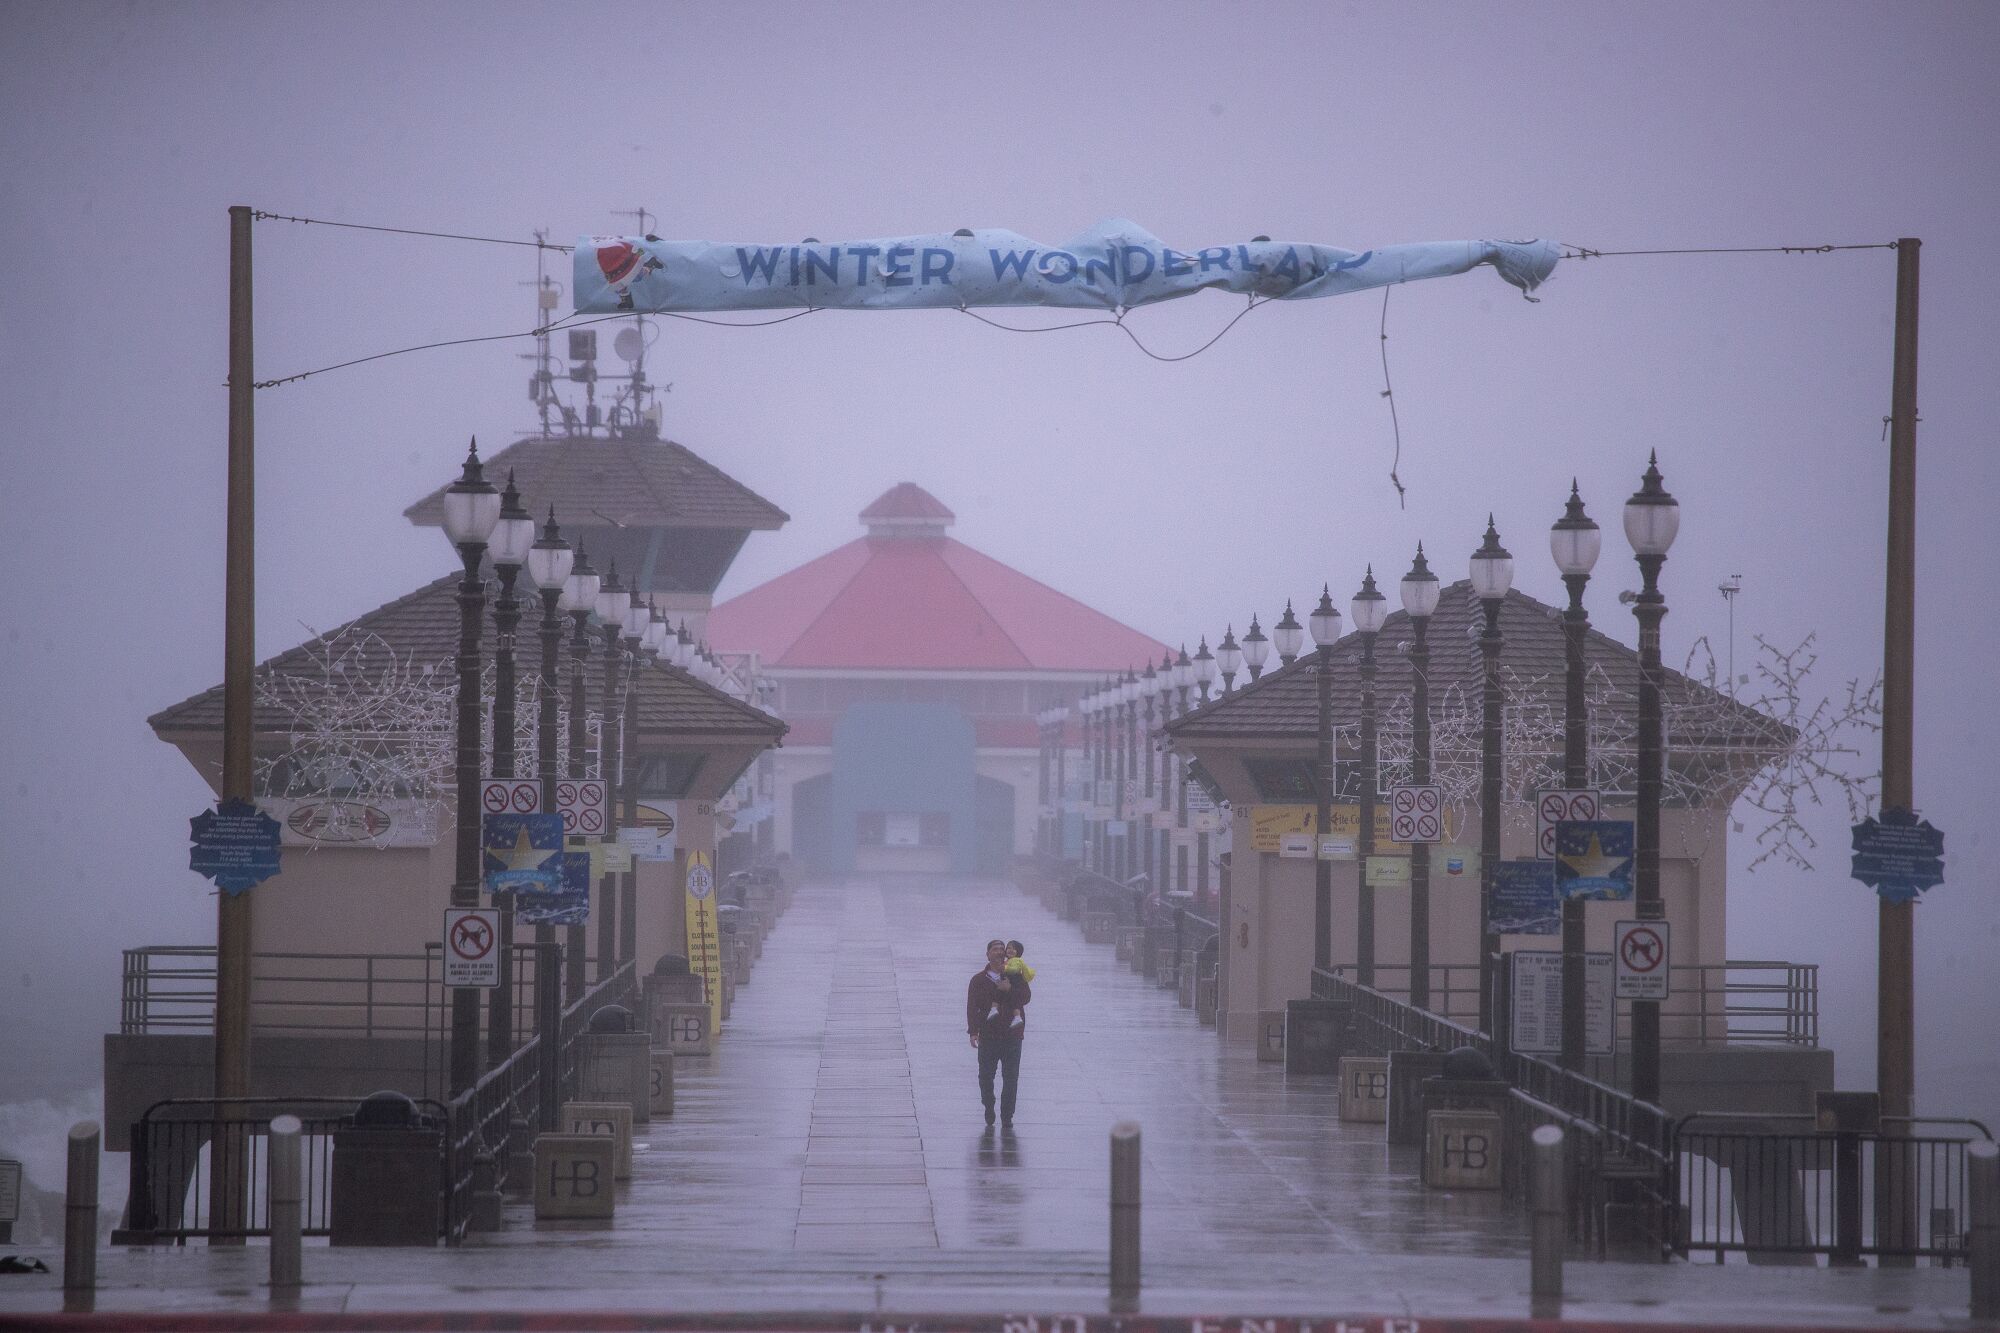 Under a "Winter Wonderland" banner, a man and child walk in solitude down the Huntington Beach Pier.